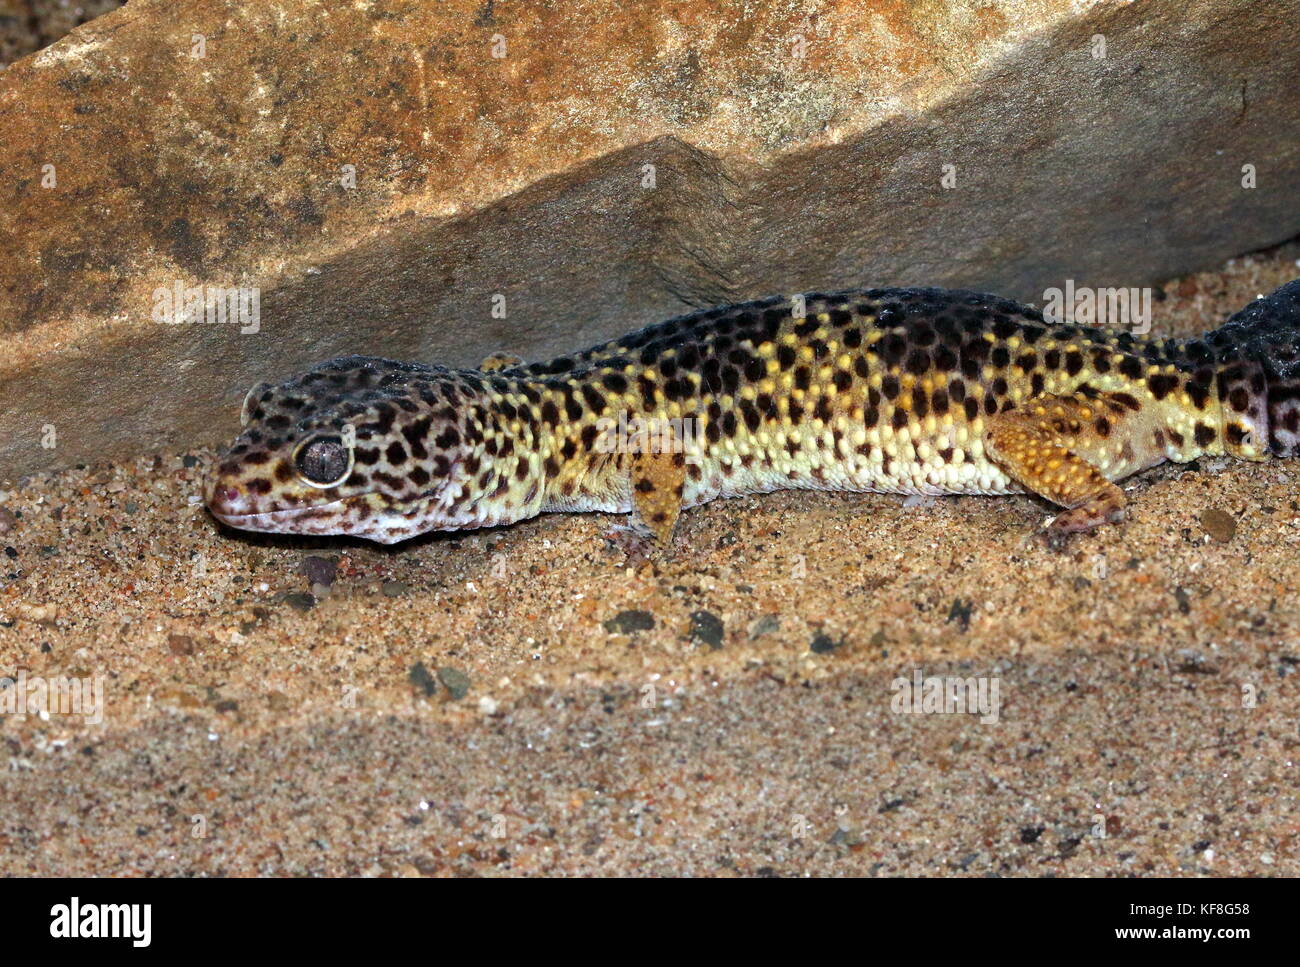 Asian  Leopard gecko (Eublepharis macularius), found in Pakistan and India. Stock Photo